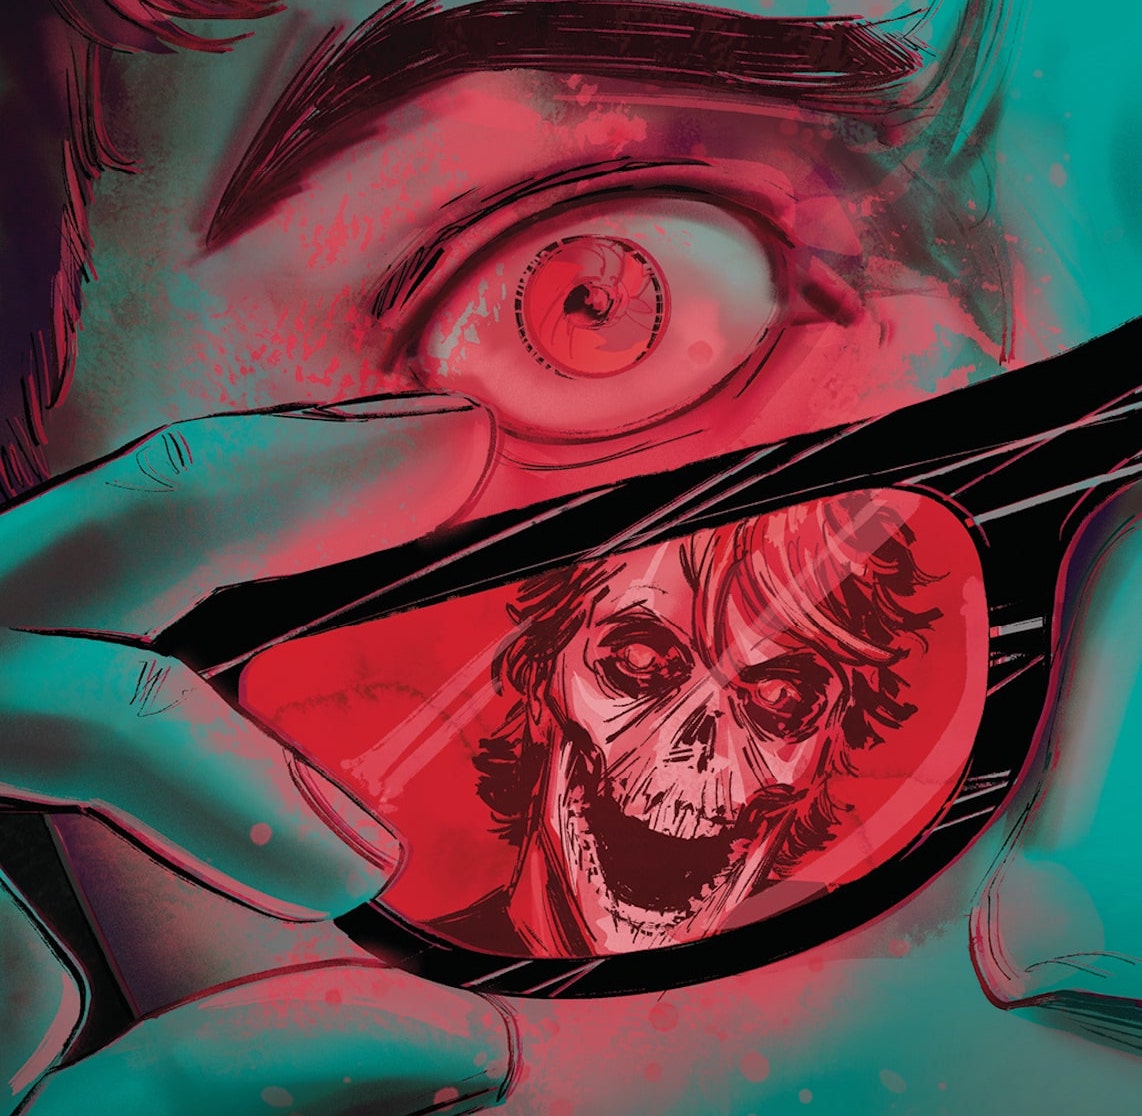 BOOM! Preview: Supernatural horror 'Specs' #1 - exclusive